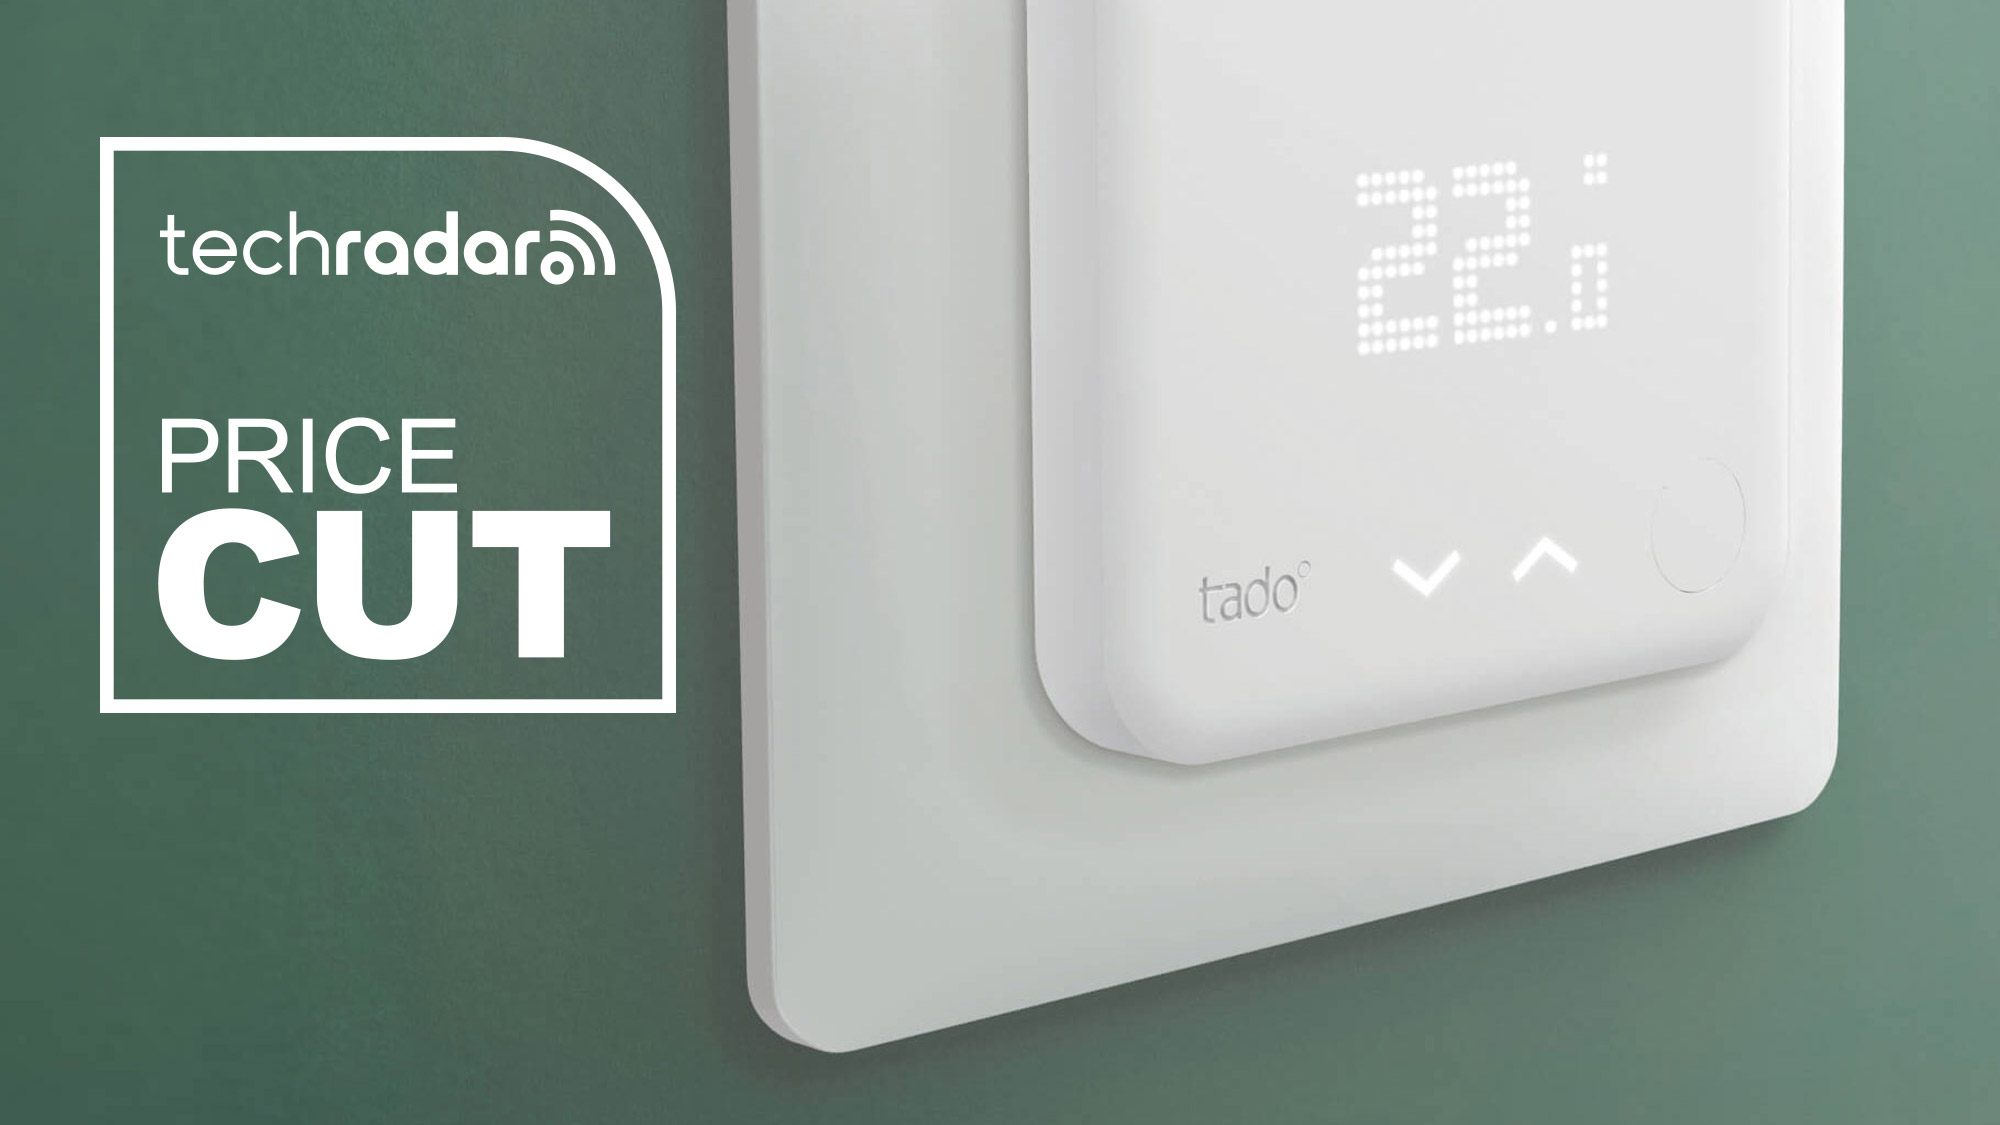 Should you buy the Tado Smart Radiator Thermostat?